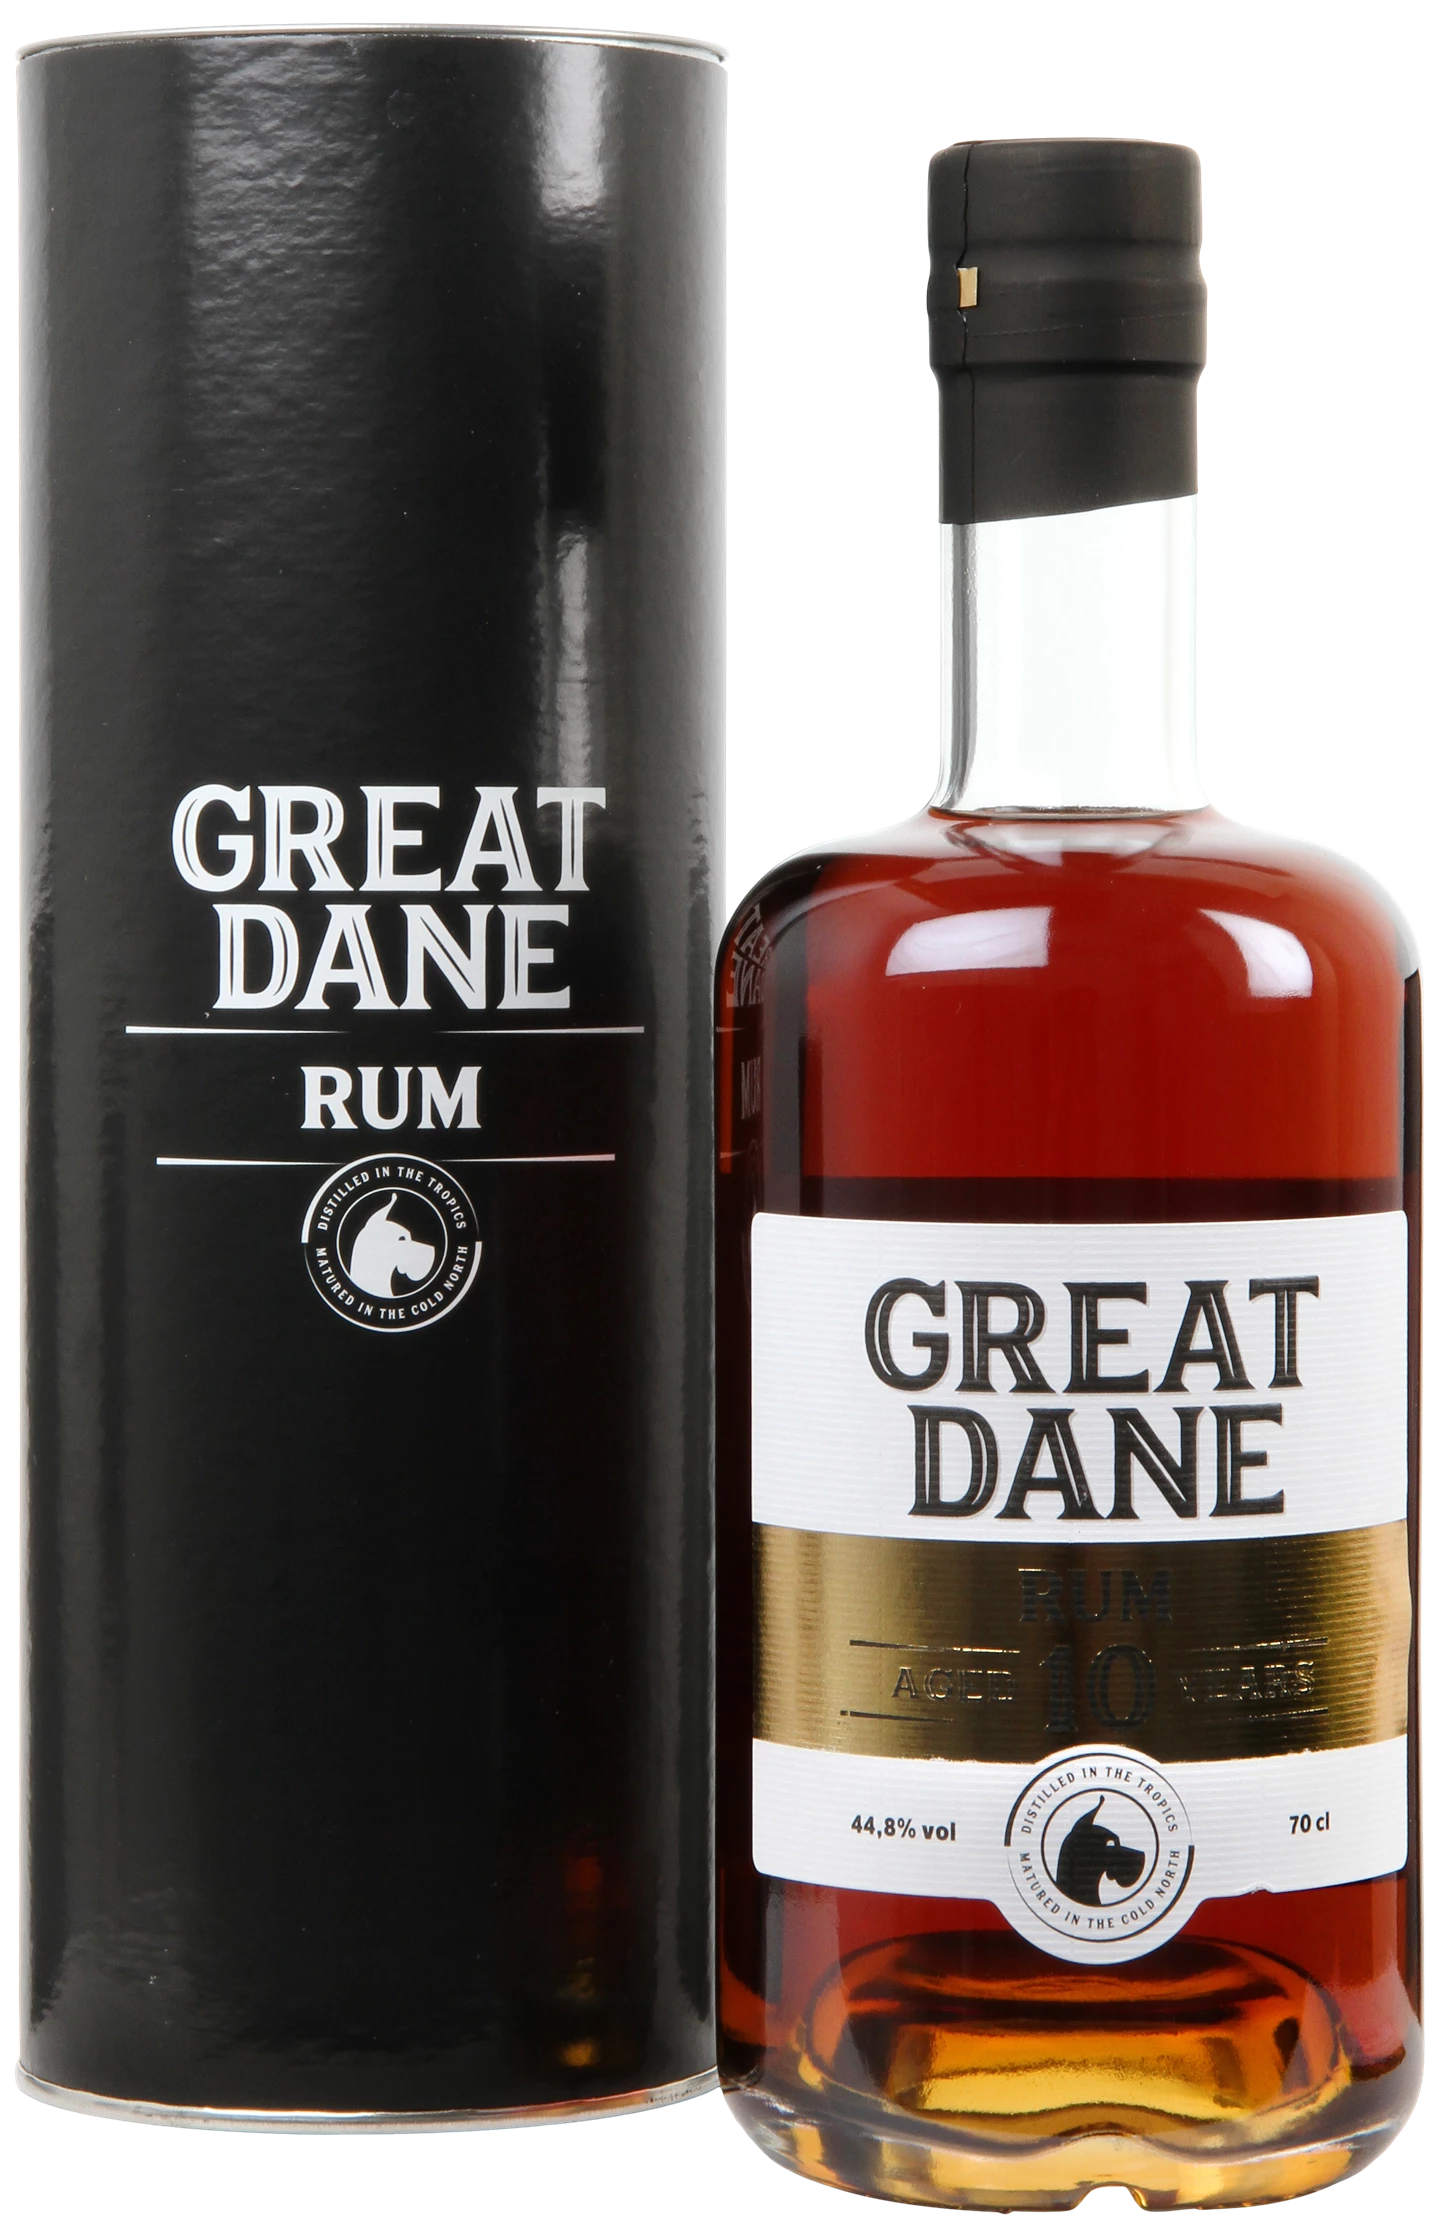 Løgismose Spiritus Skotlander Rum Great Dane Rum 10 År 44,8% 70Cl - 219384 1